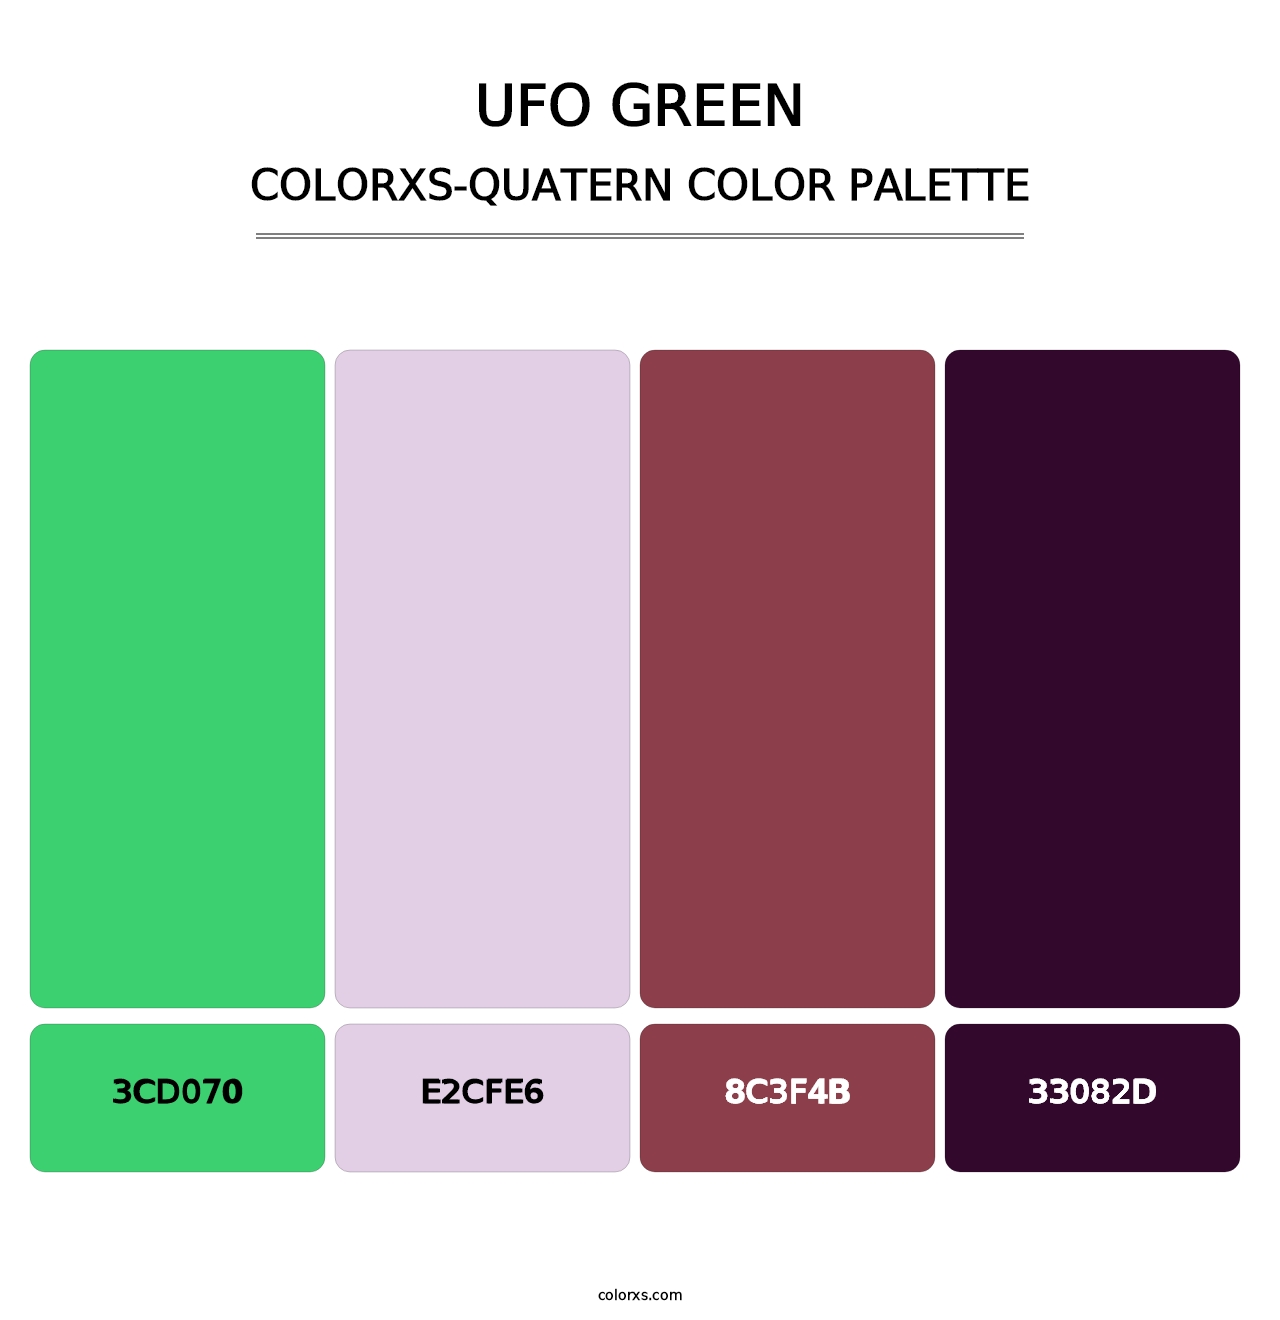 UFO Green - Colorxs Quatern Palette